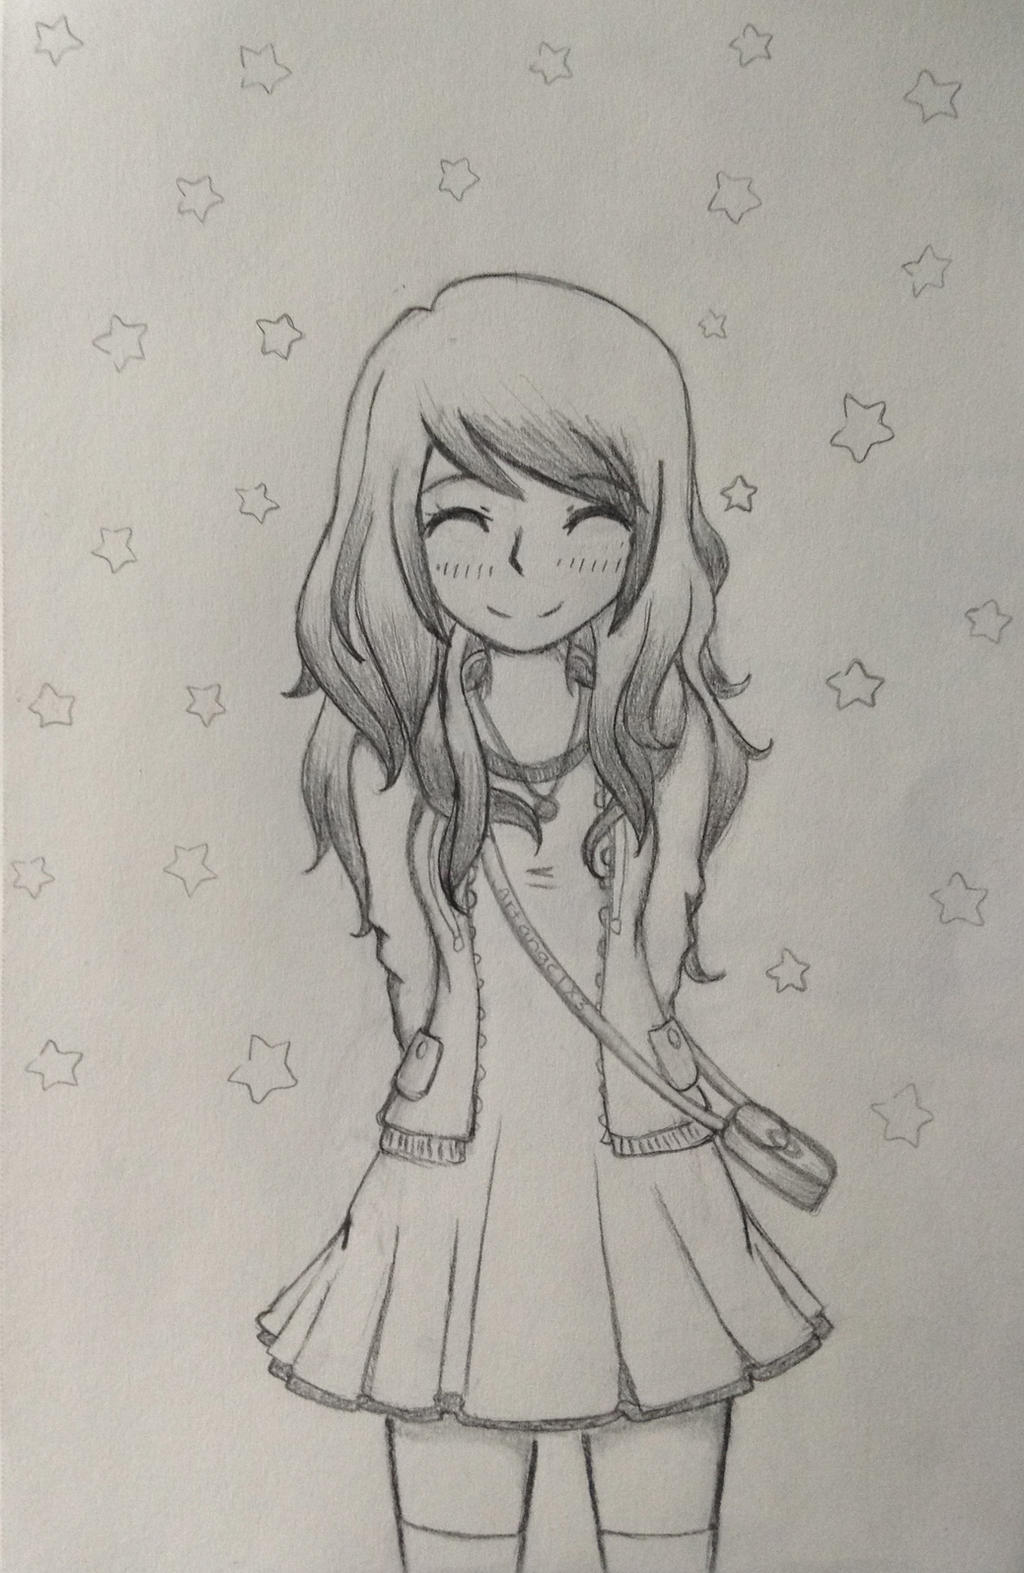 happy anime girl by artangelx3 on DeviantArt